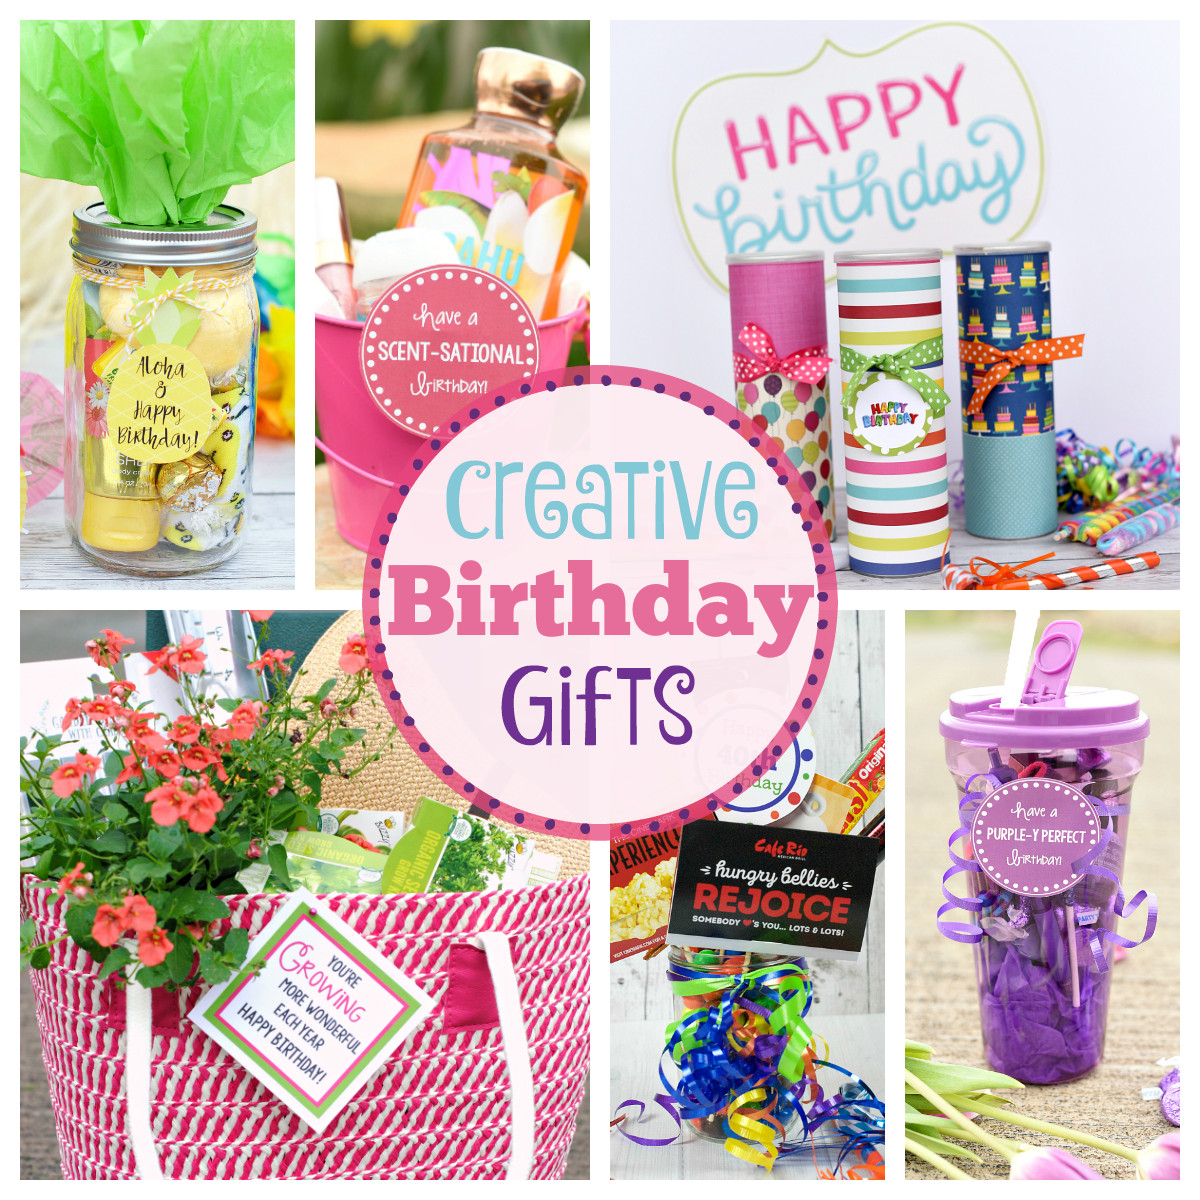 Friend Birthday Gift Ideas
 25 Fun Birthday Gifts Ideas for Friends Crazy Little